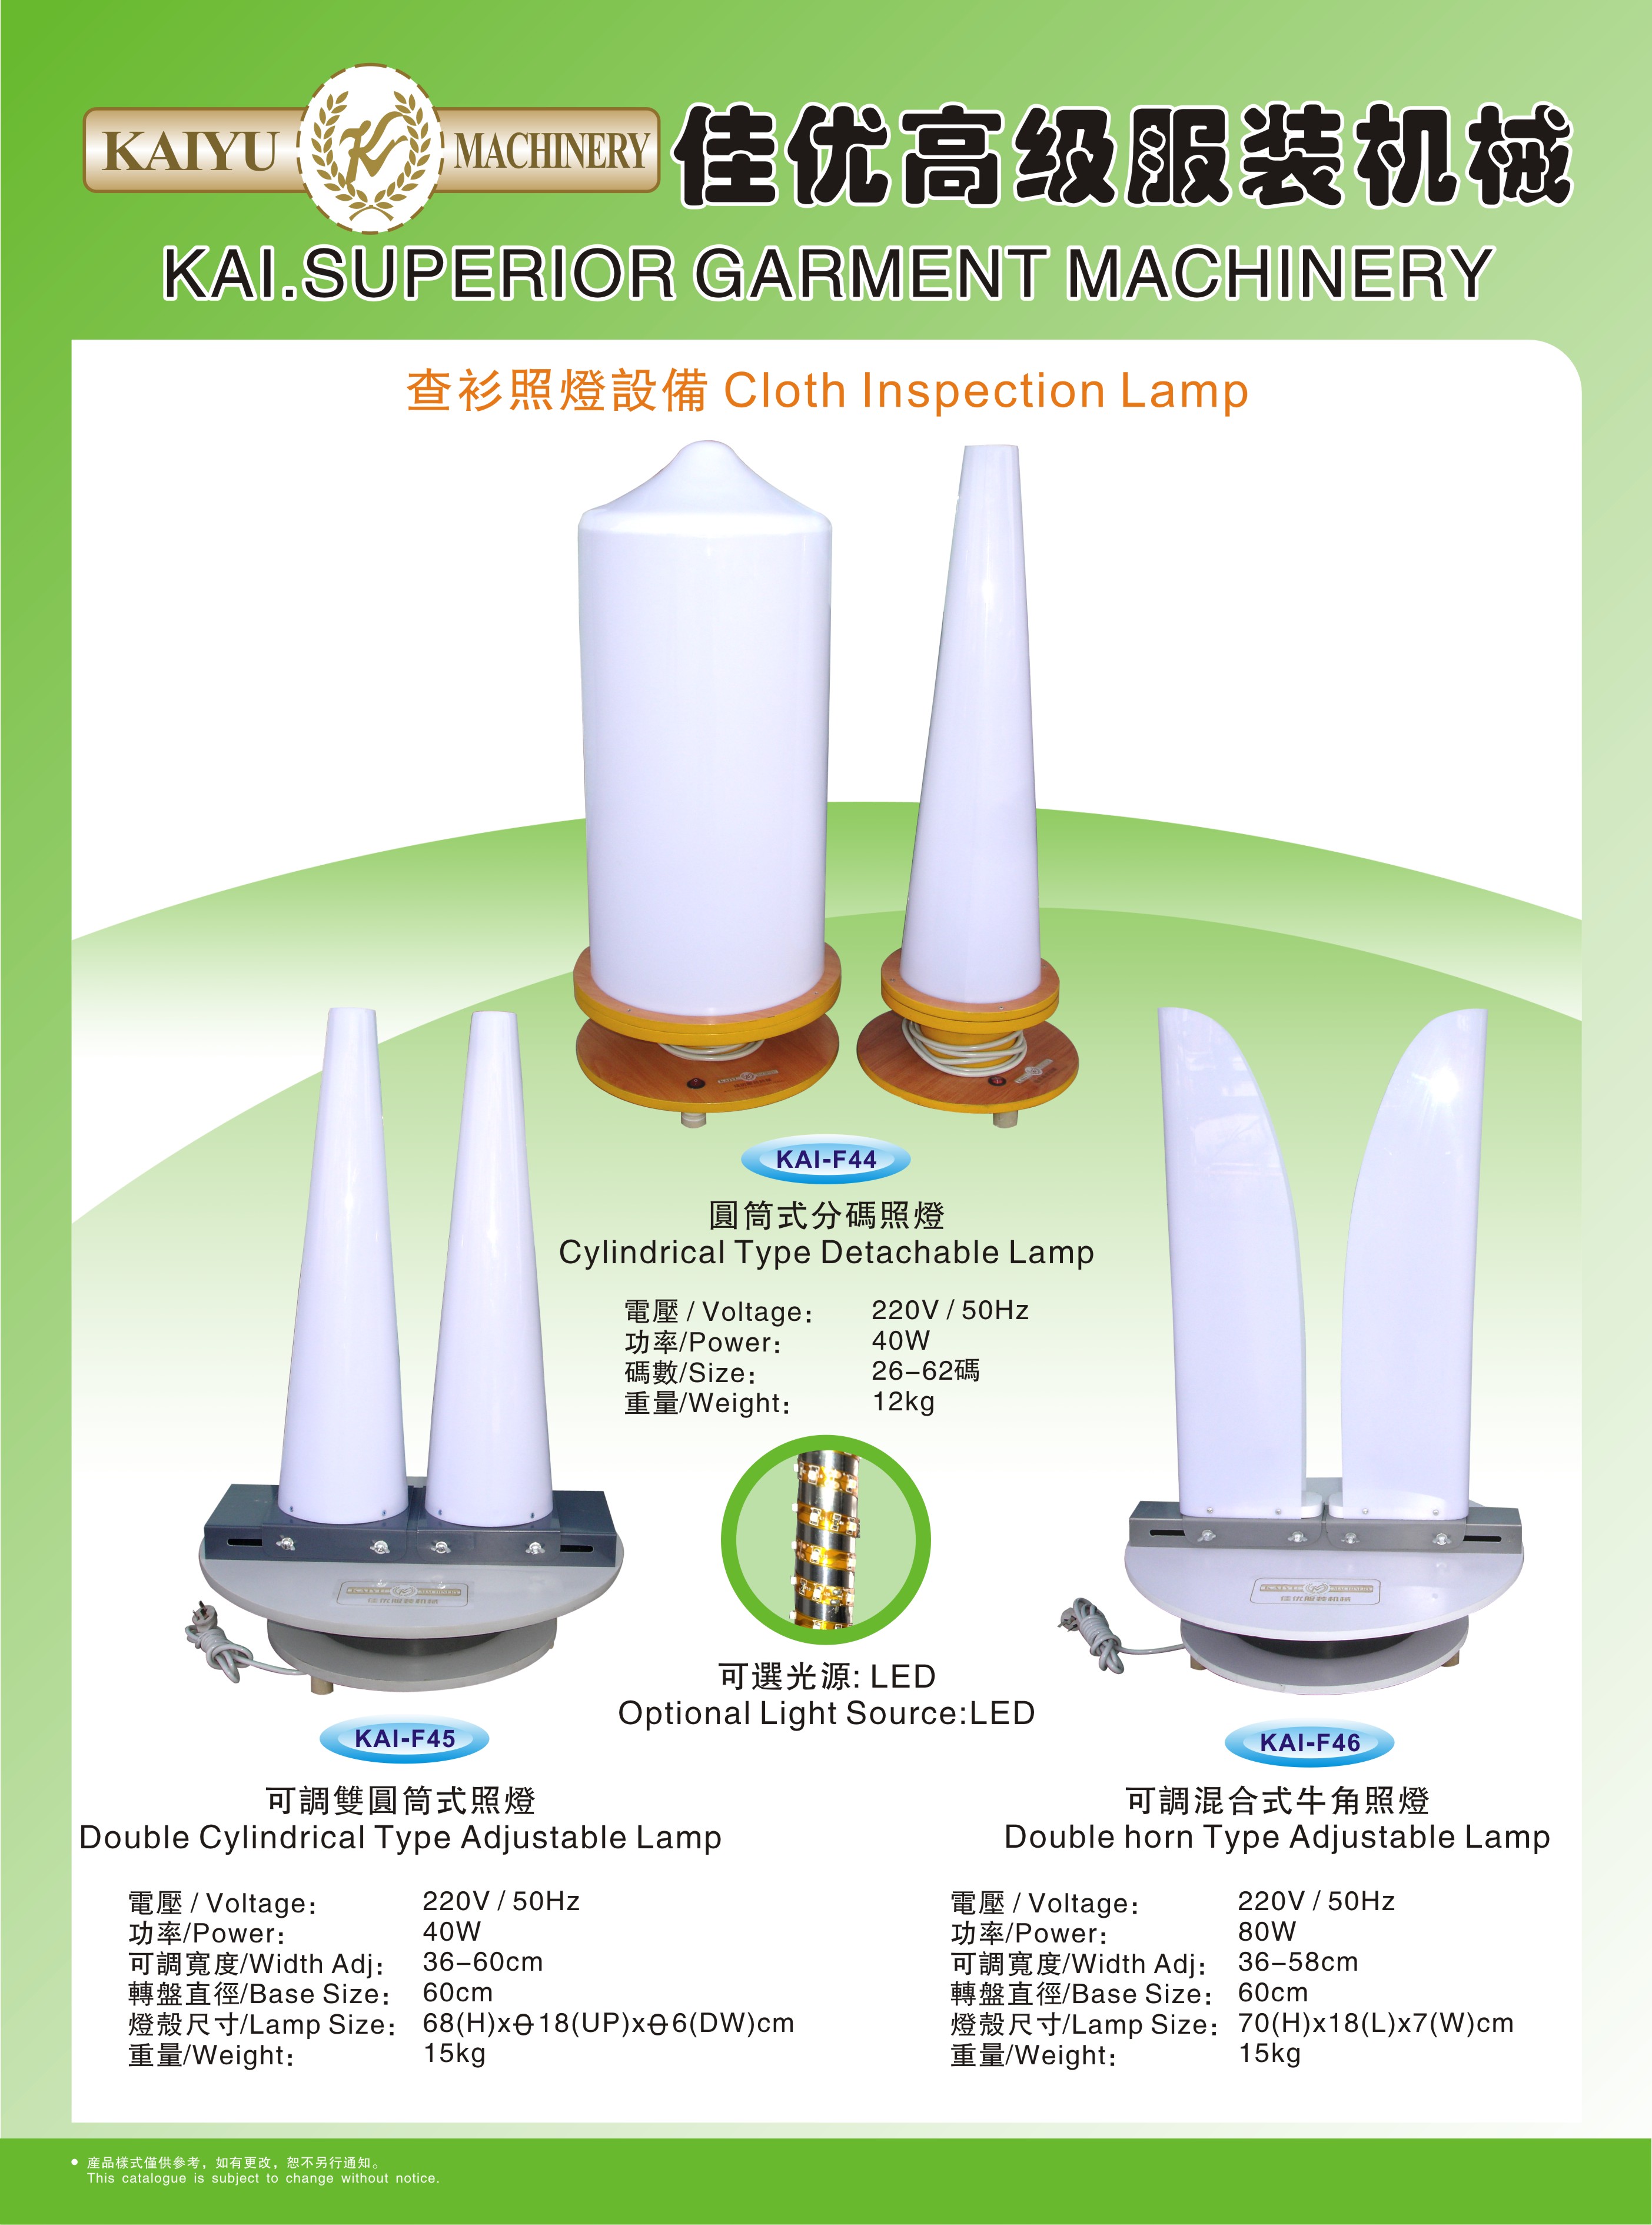 JAPAN TECHNOLOGY KAIYU BRAND KAI-F44-36 Cloth Inspection Lamp FOR WOVEN FABRICS